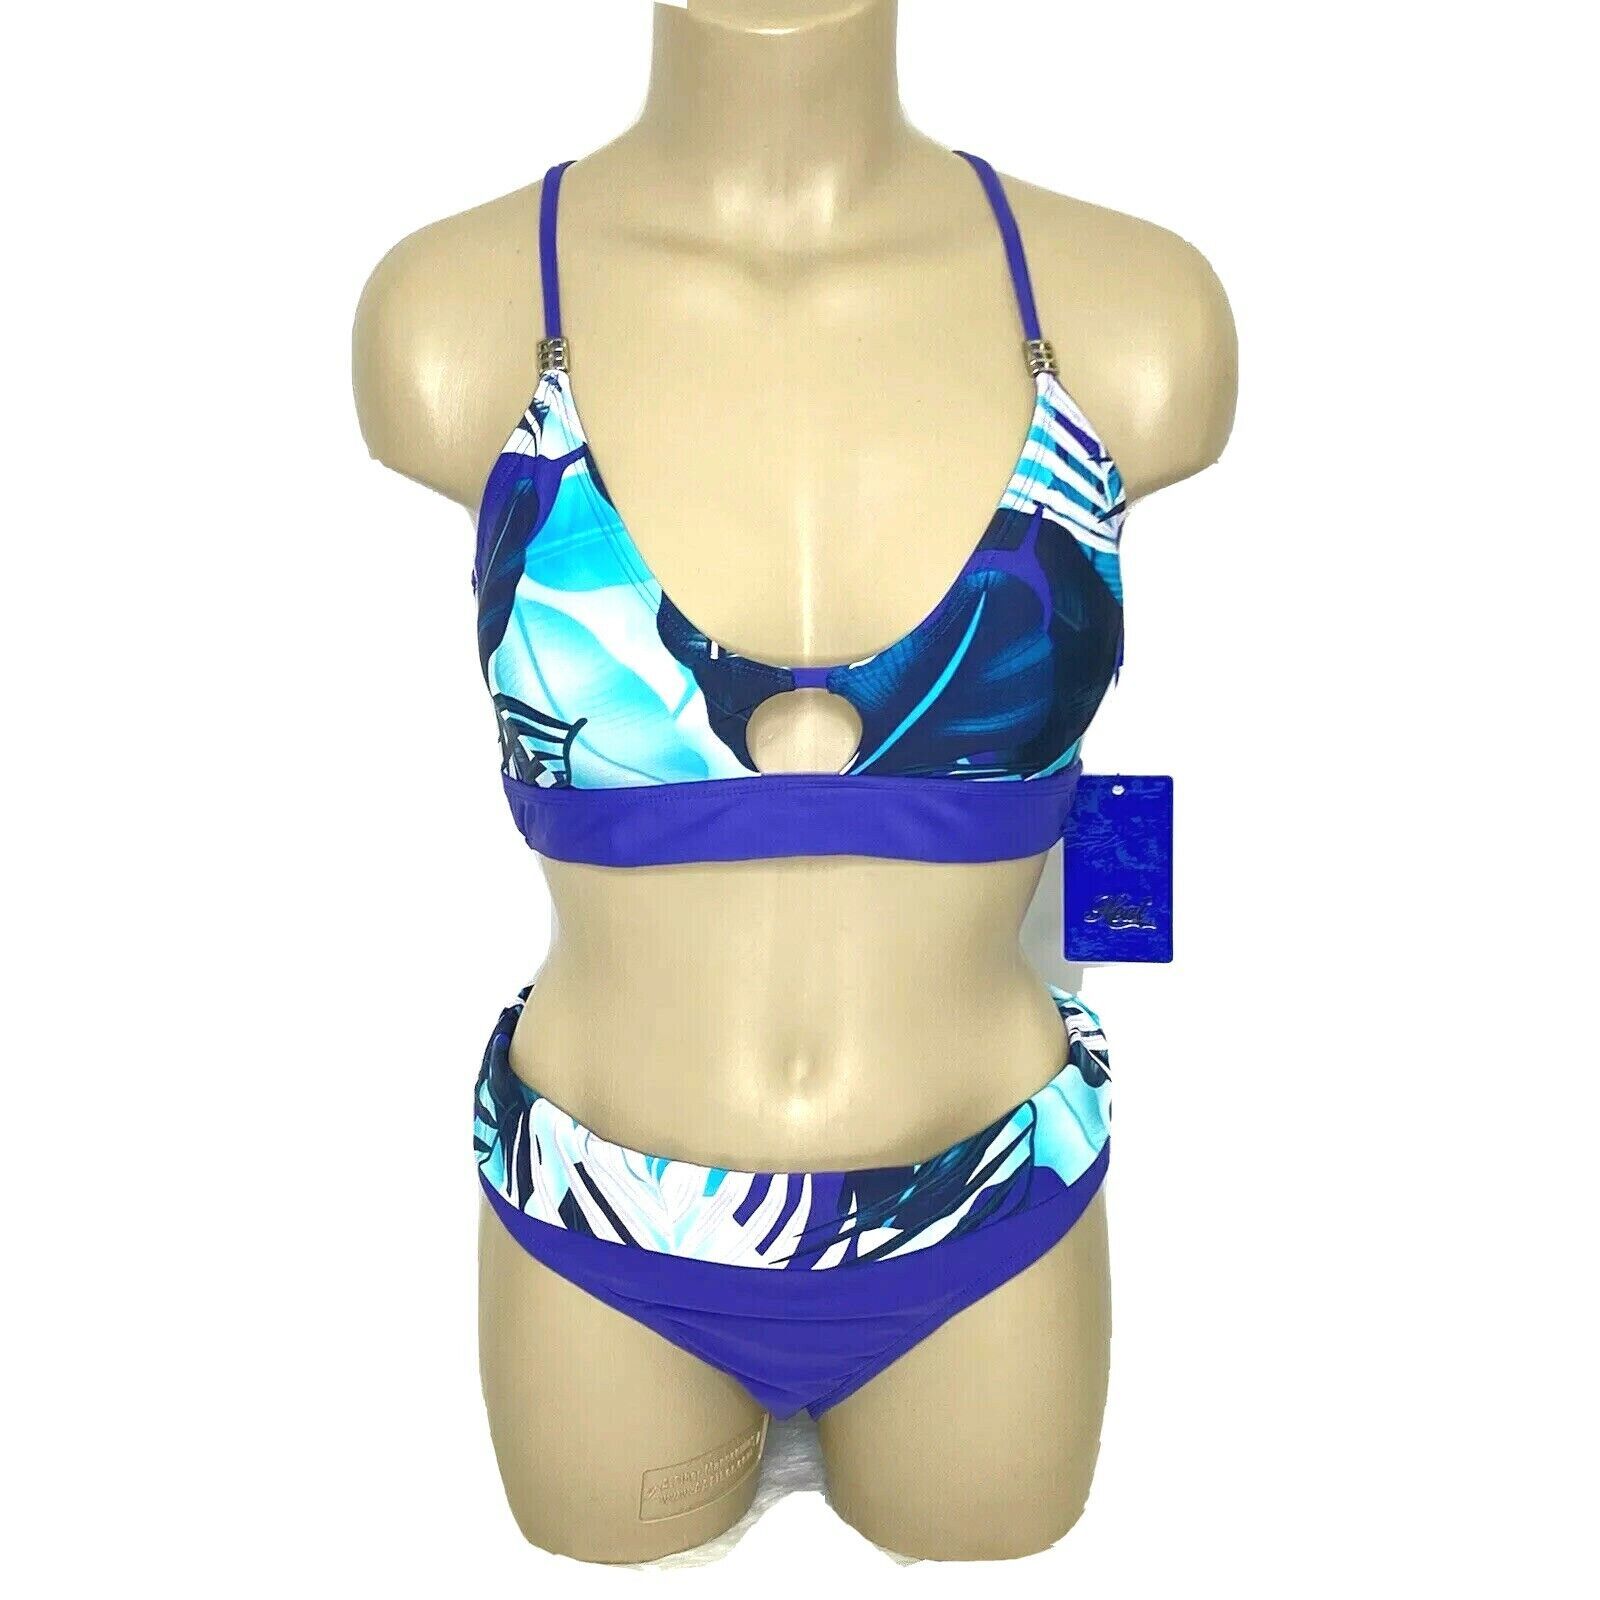 Primary image for Heat Swimwear Siesta Women's Large 2 pc Bikini Tie Top Foldover Bottom Blue NEW